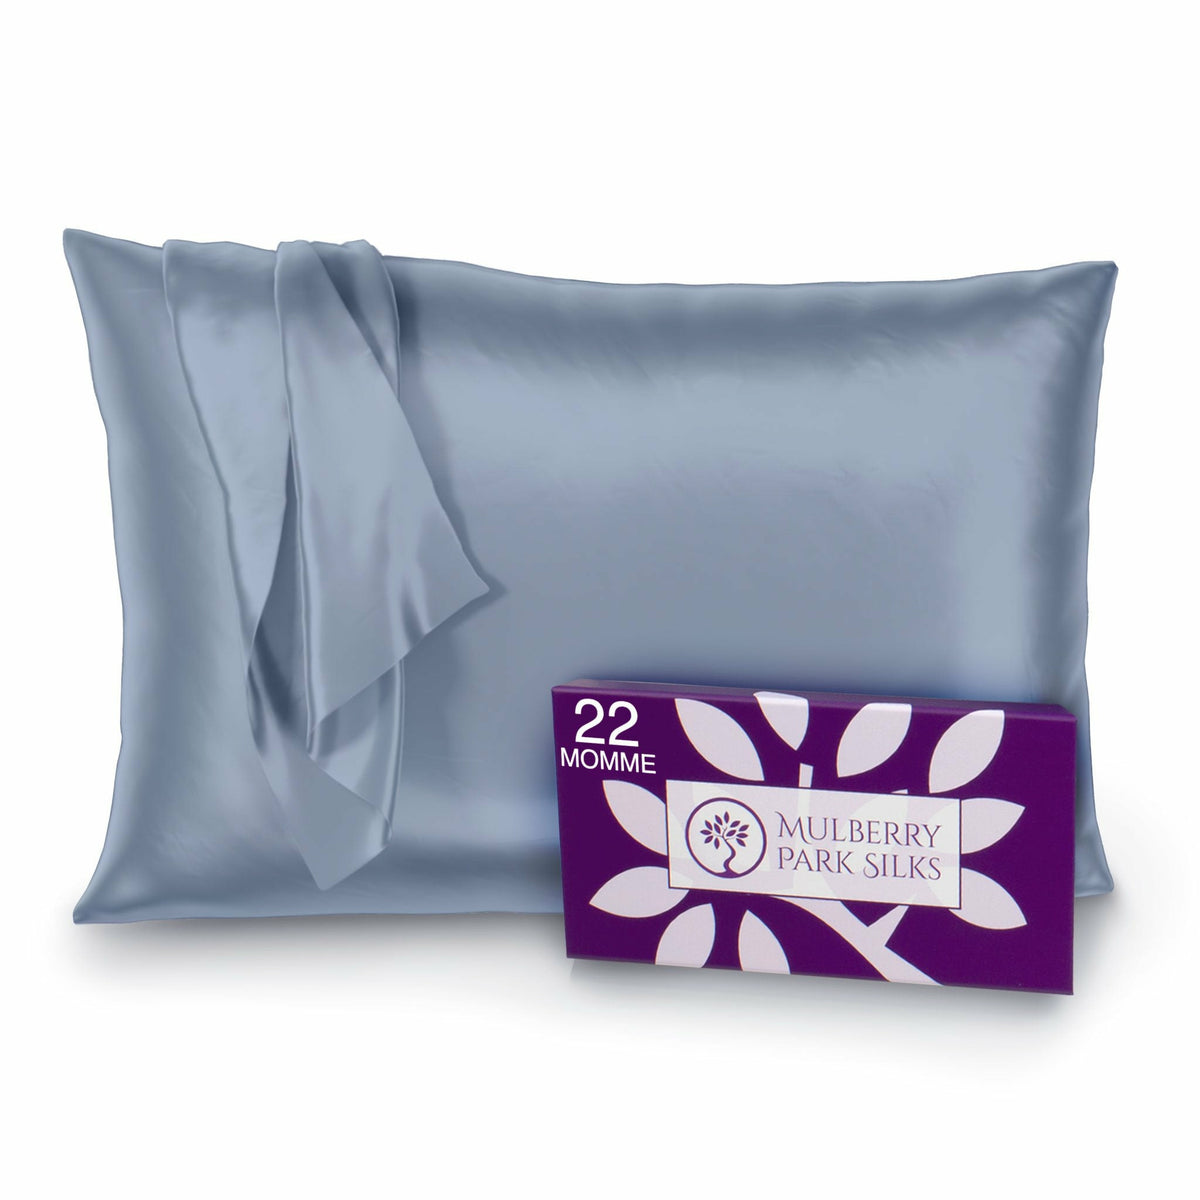 Mulberry Park Silks Deluxe 22 Momme Pure Silk Pillowcase Main Steel Blue Fine Linens